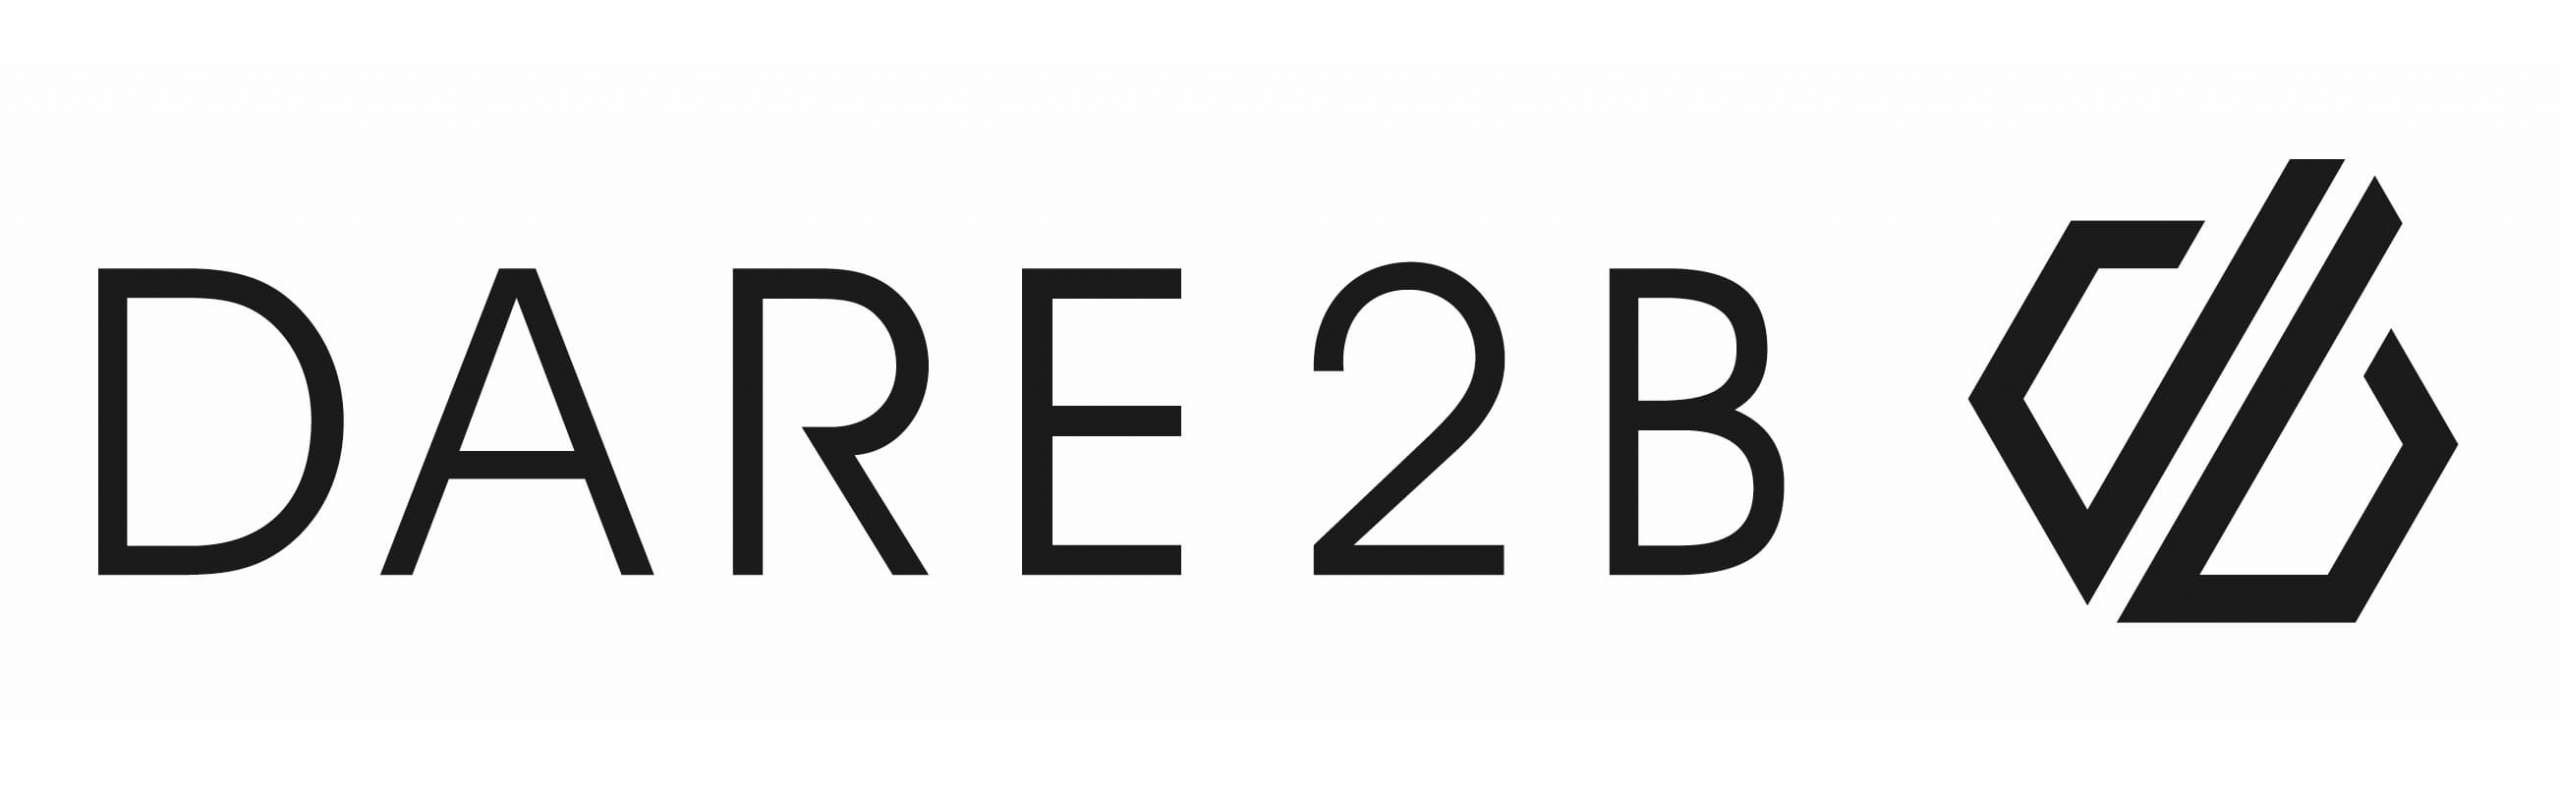 Dare2b-logo